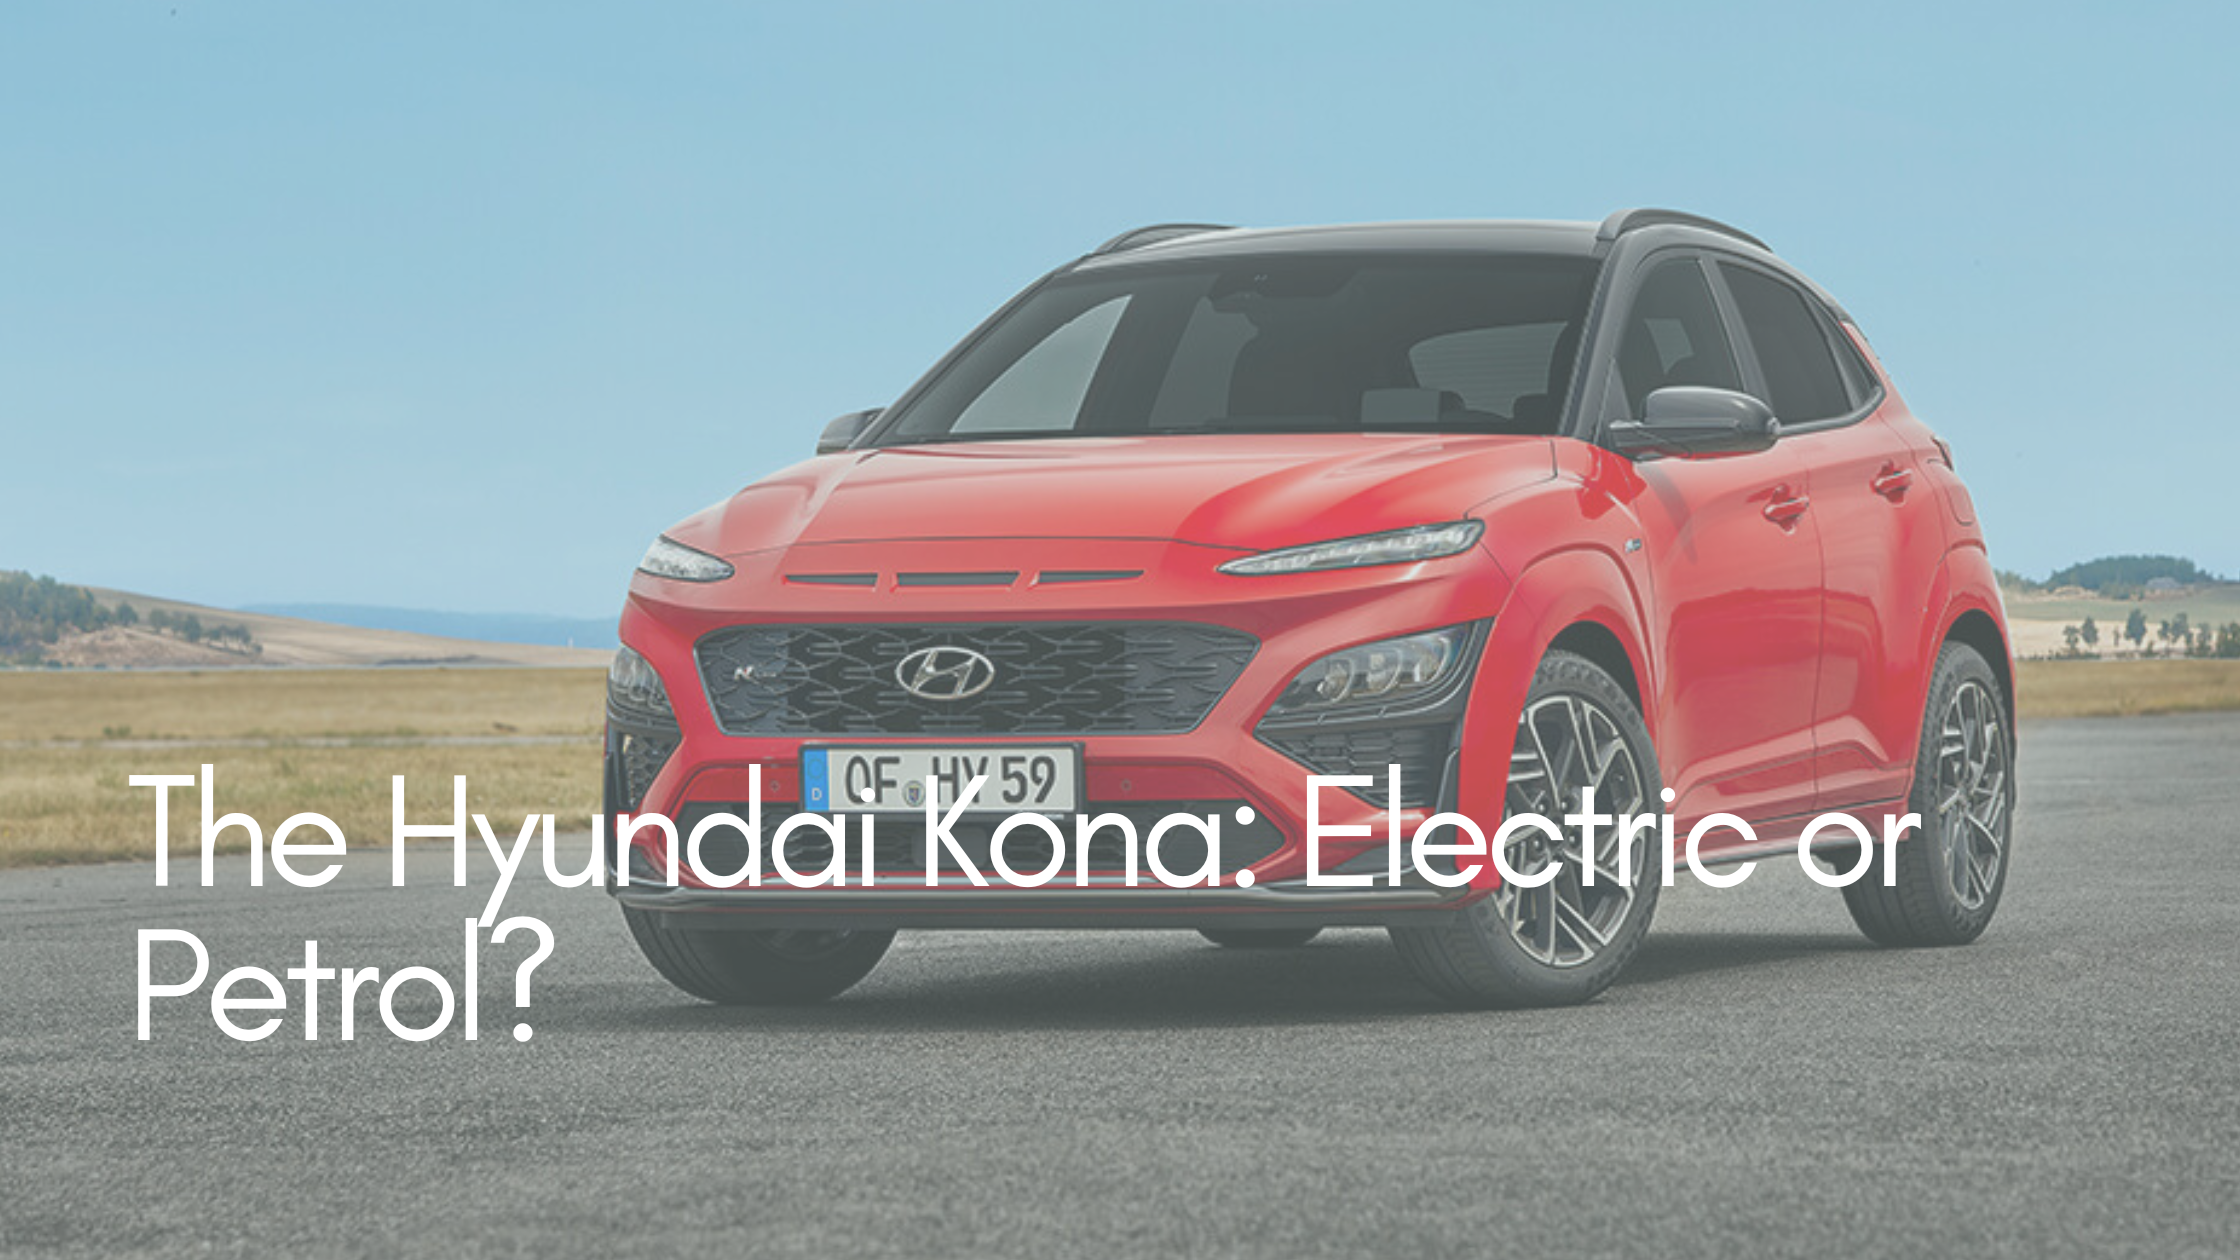 The Hyundai Kona: Electric or Petrol